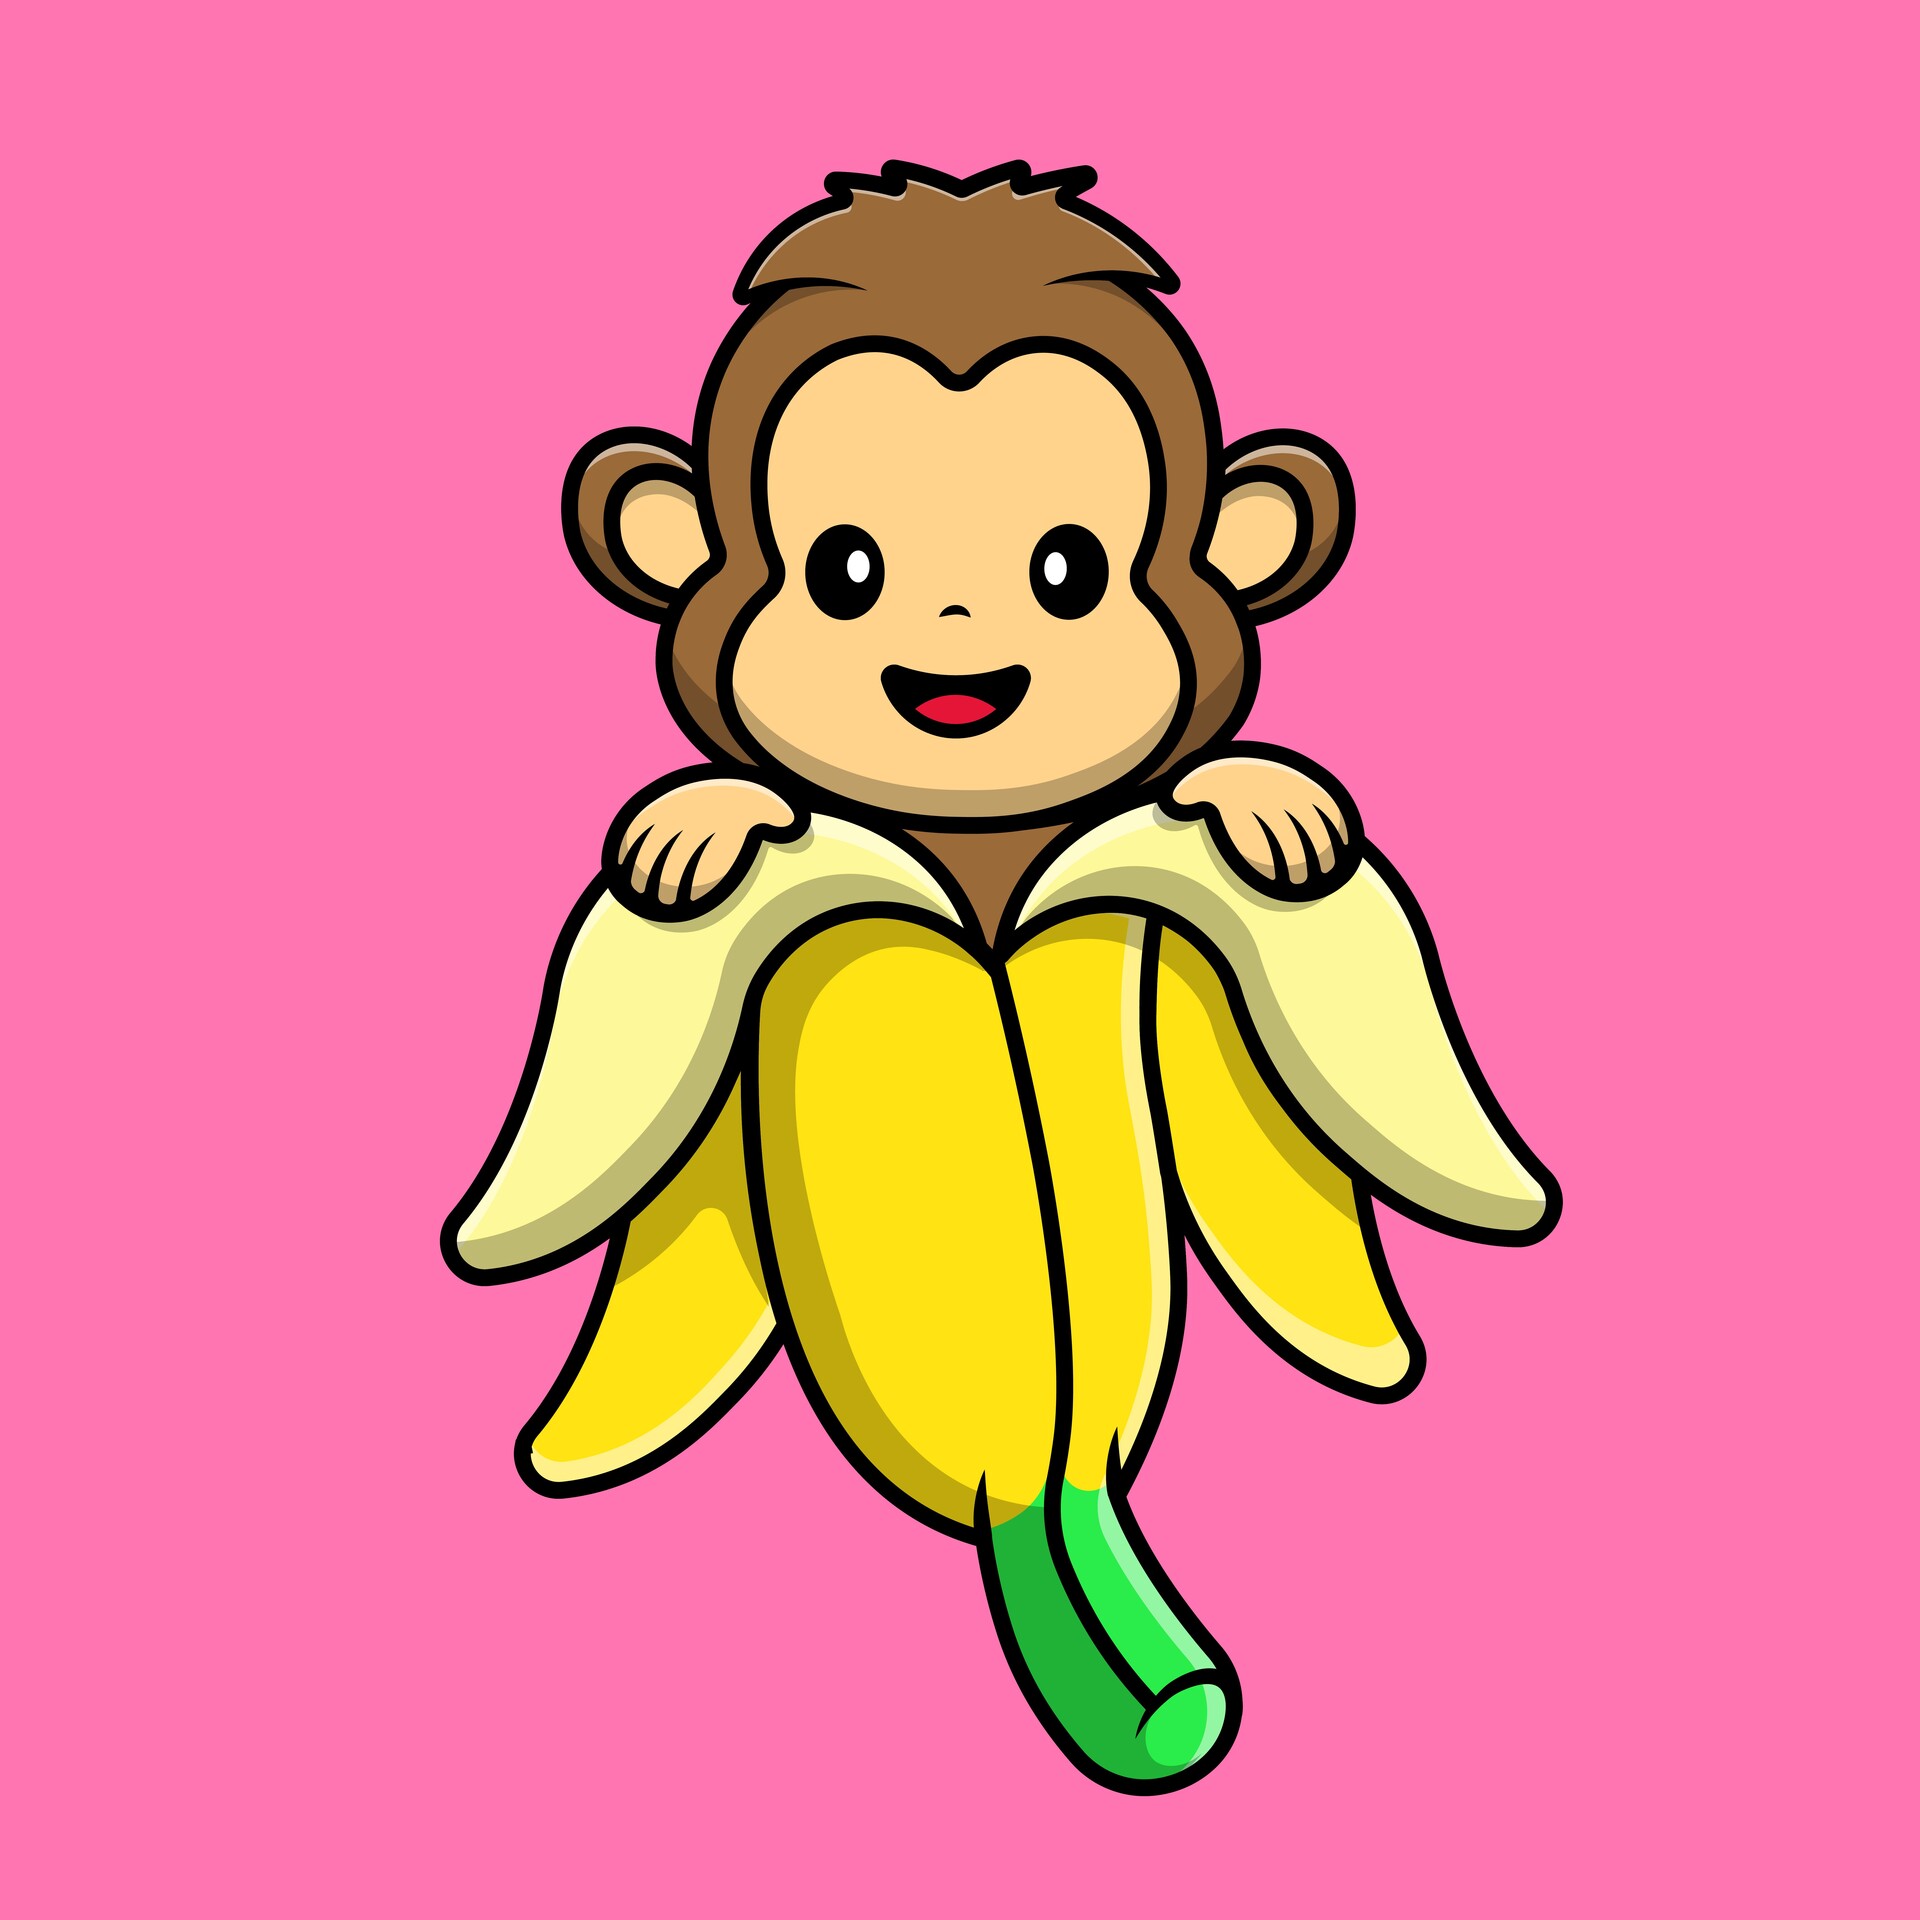 ArtStation - Cute Monkey Cartoon Character Illustration